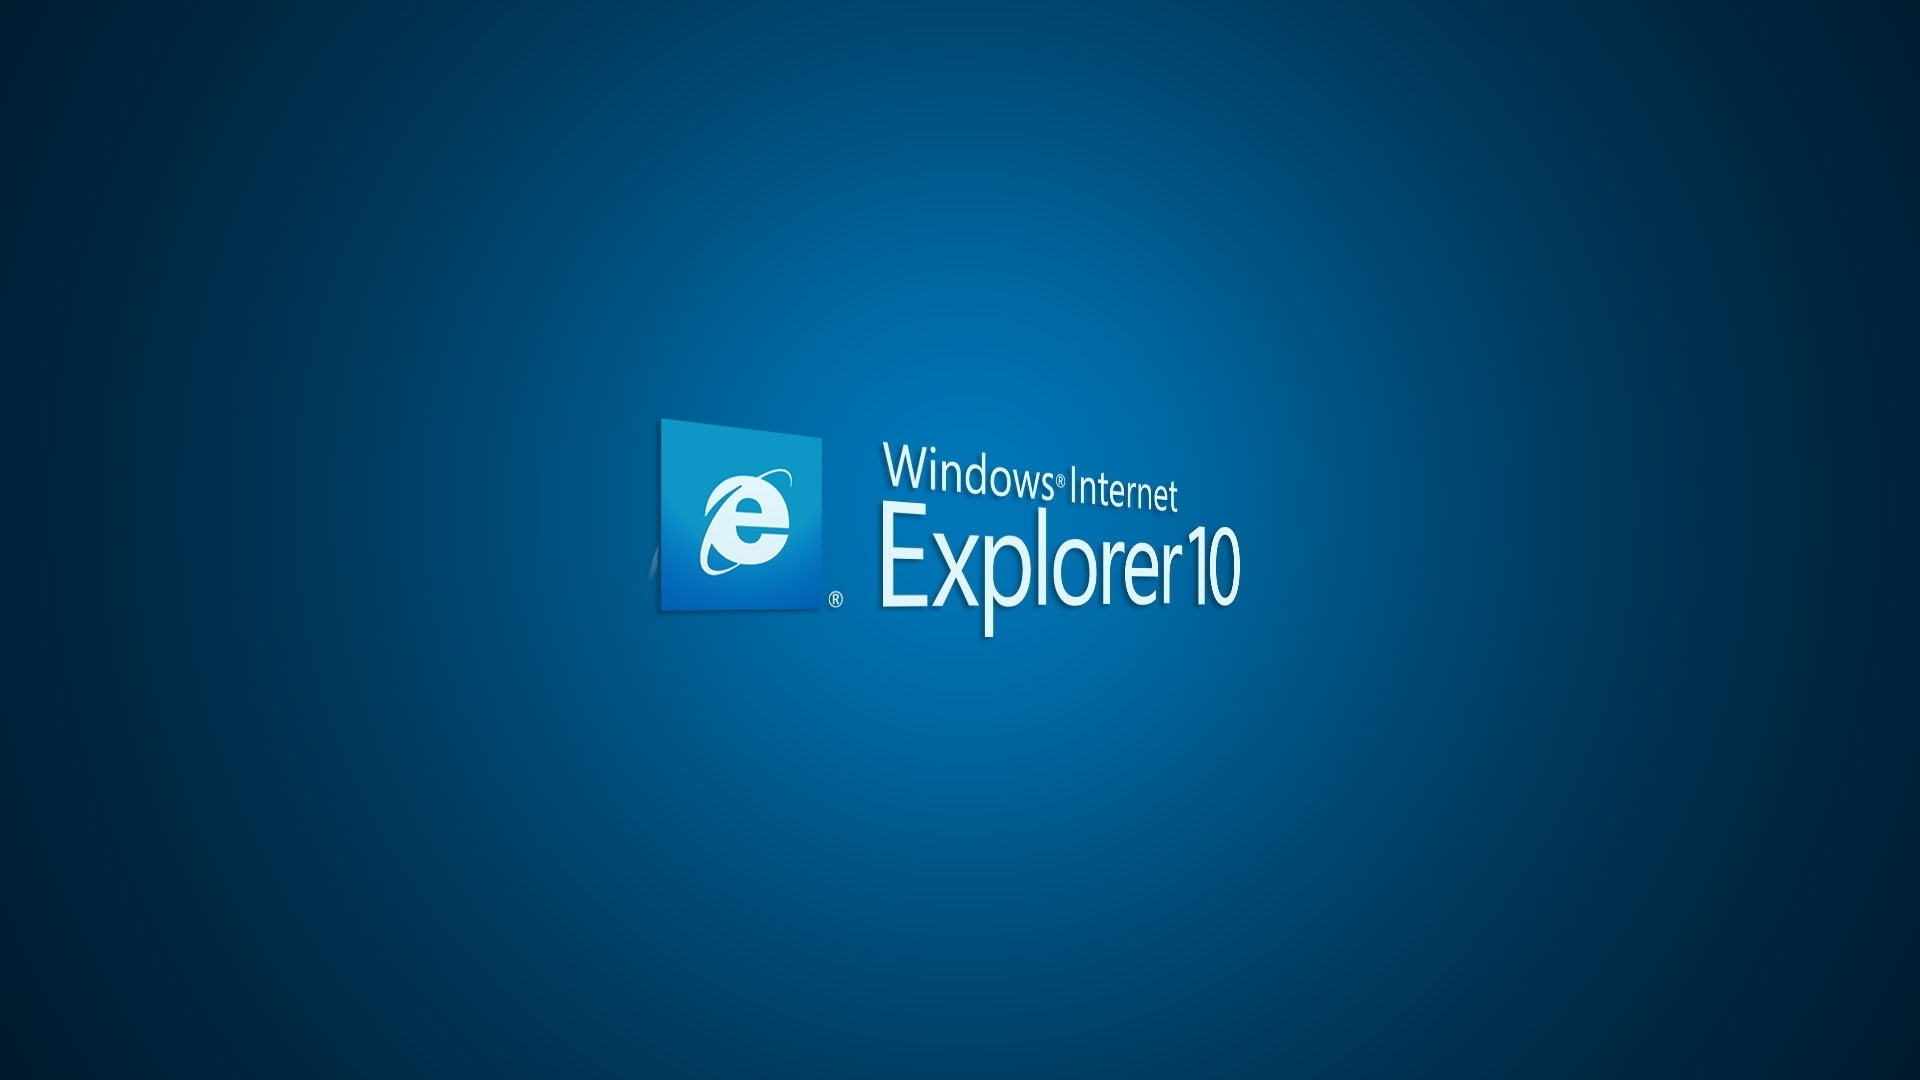 Windows Internet Explorer 10   High Definition Wallpapers   HD